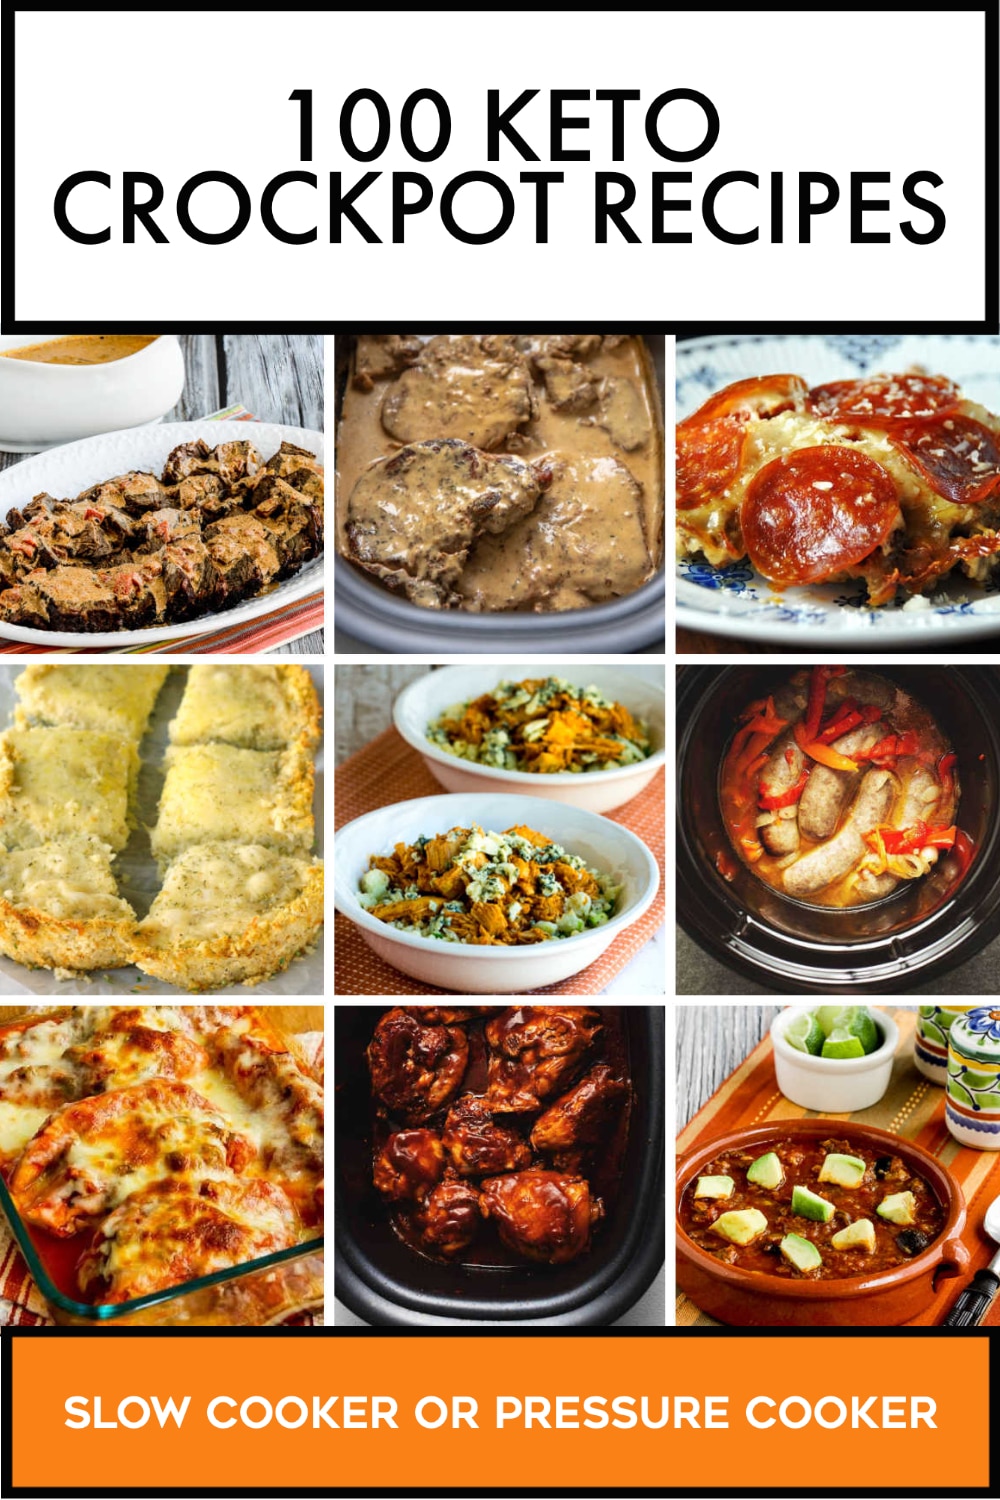 Pinterest image of 100 Keto Crockpot Recipes